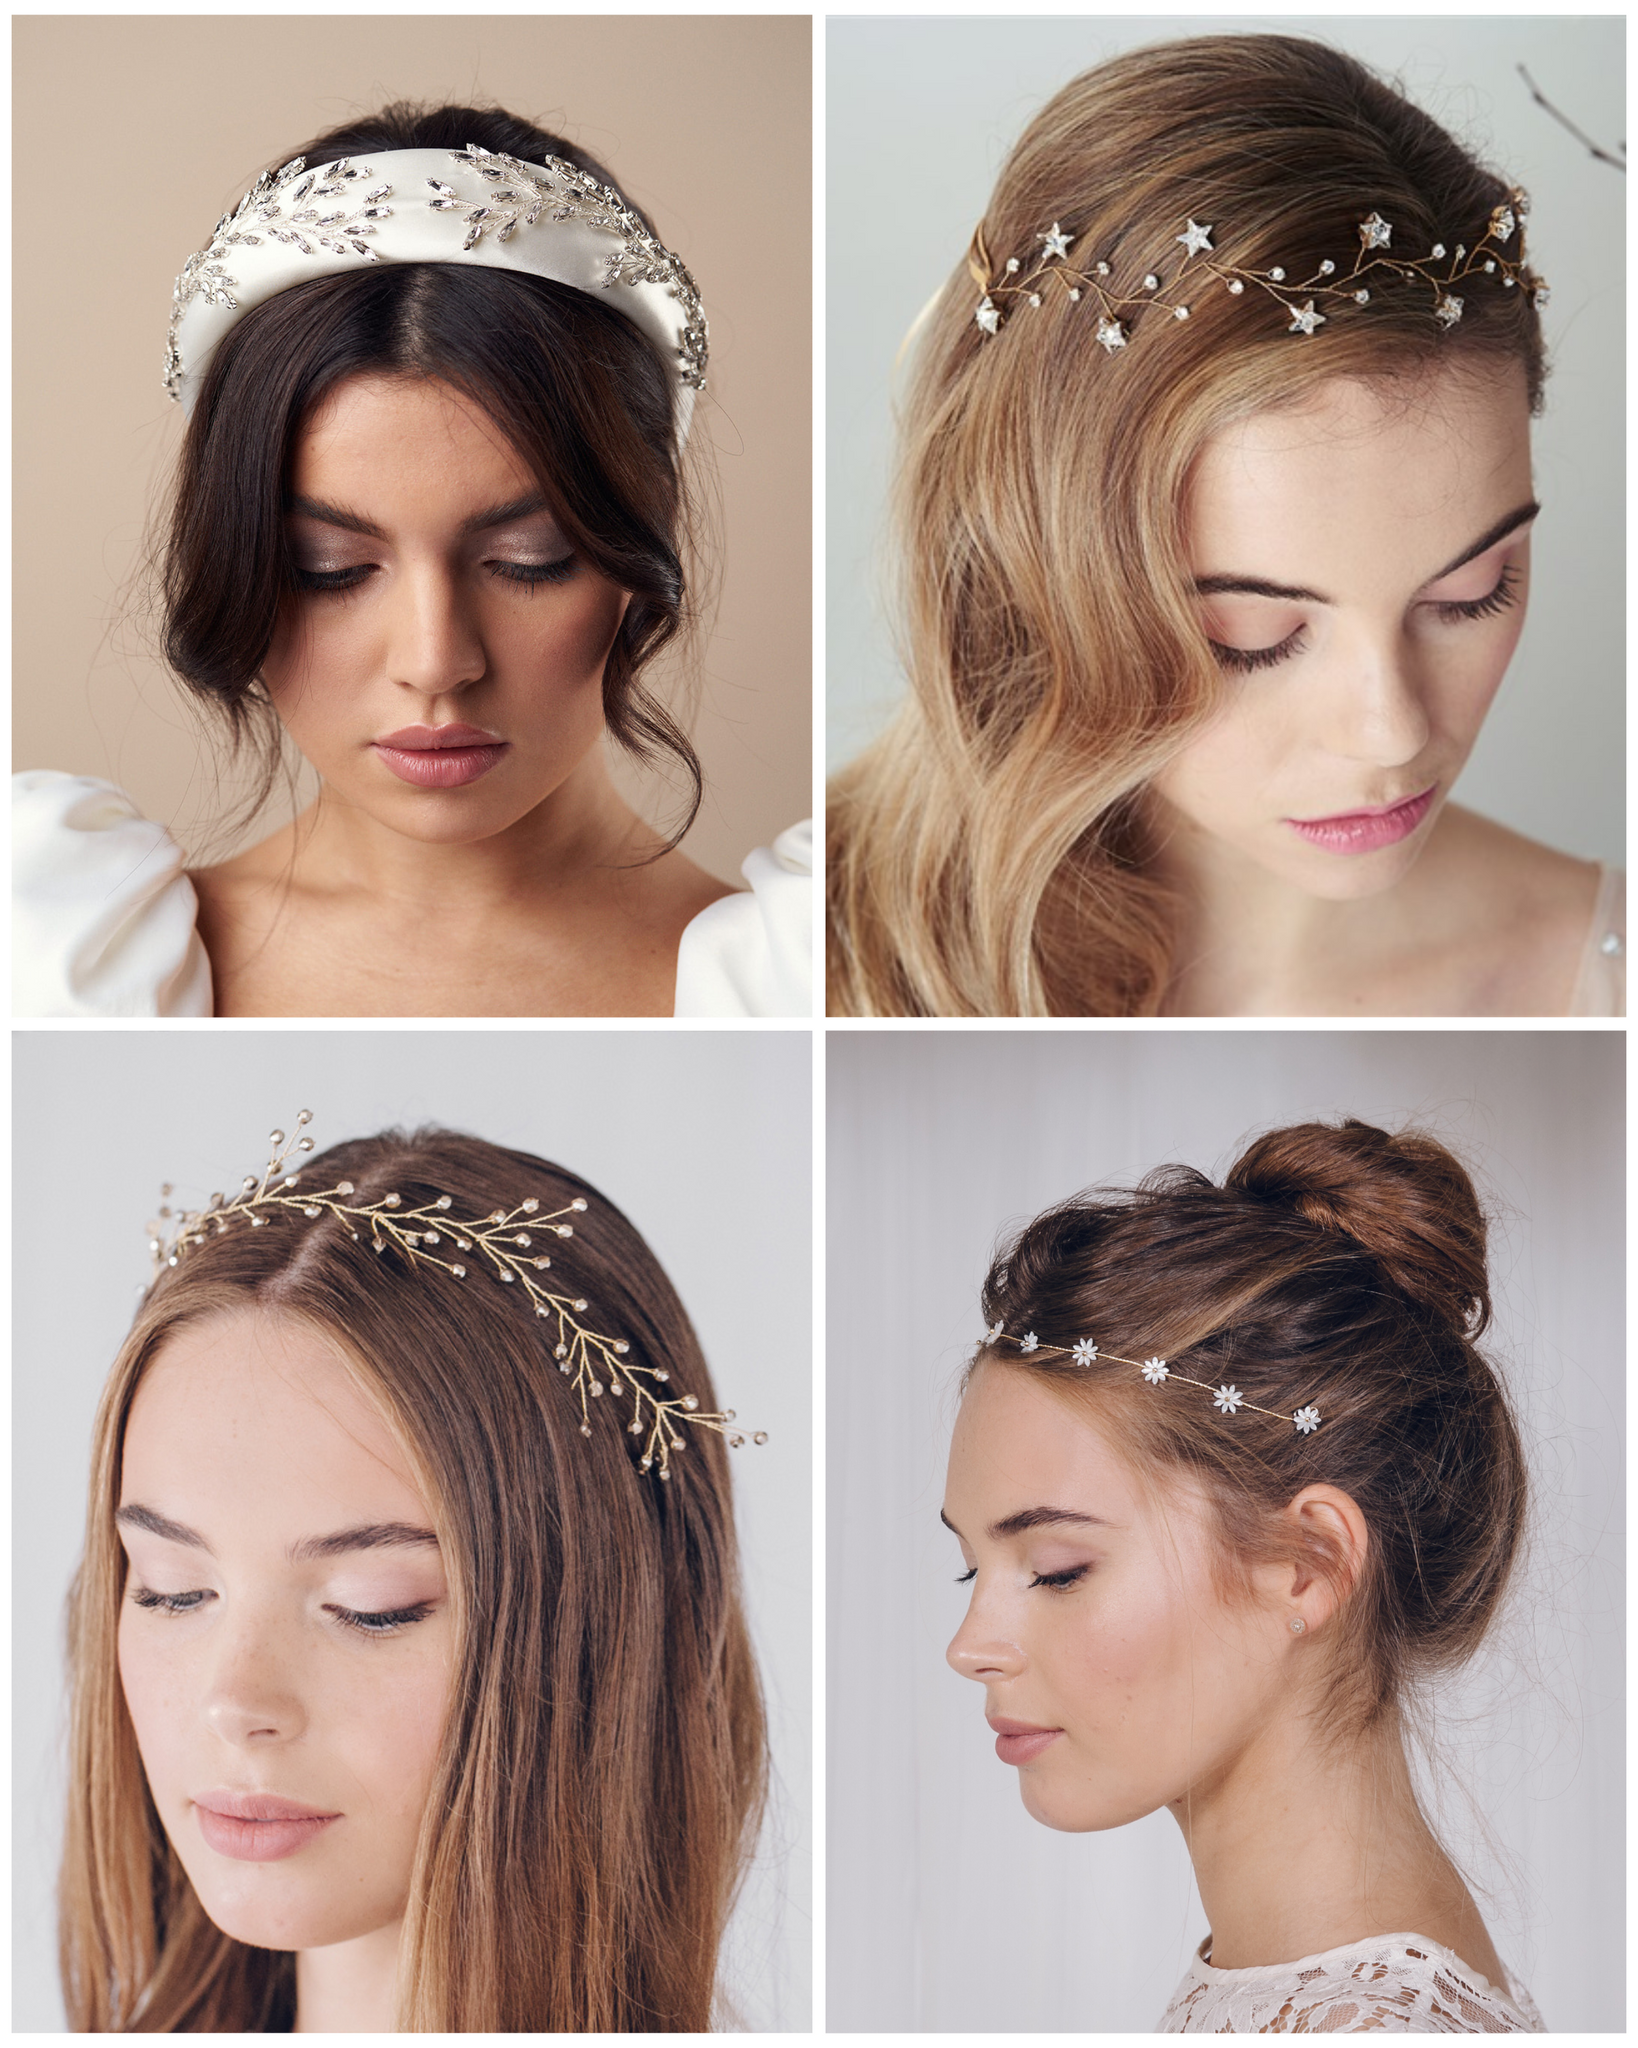 How to choose a wedding headband